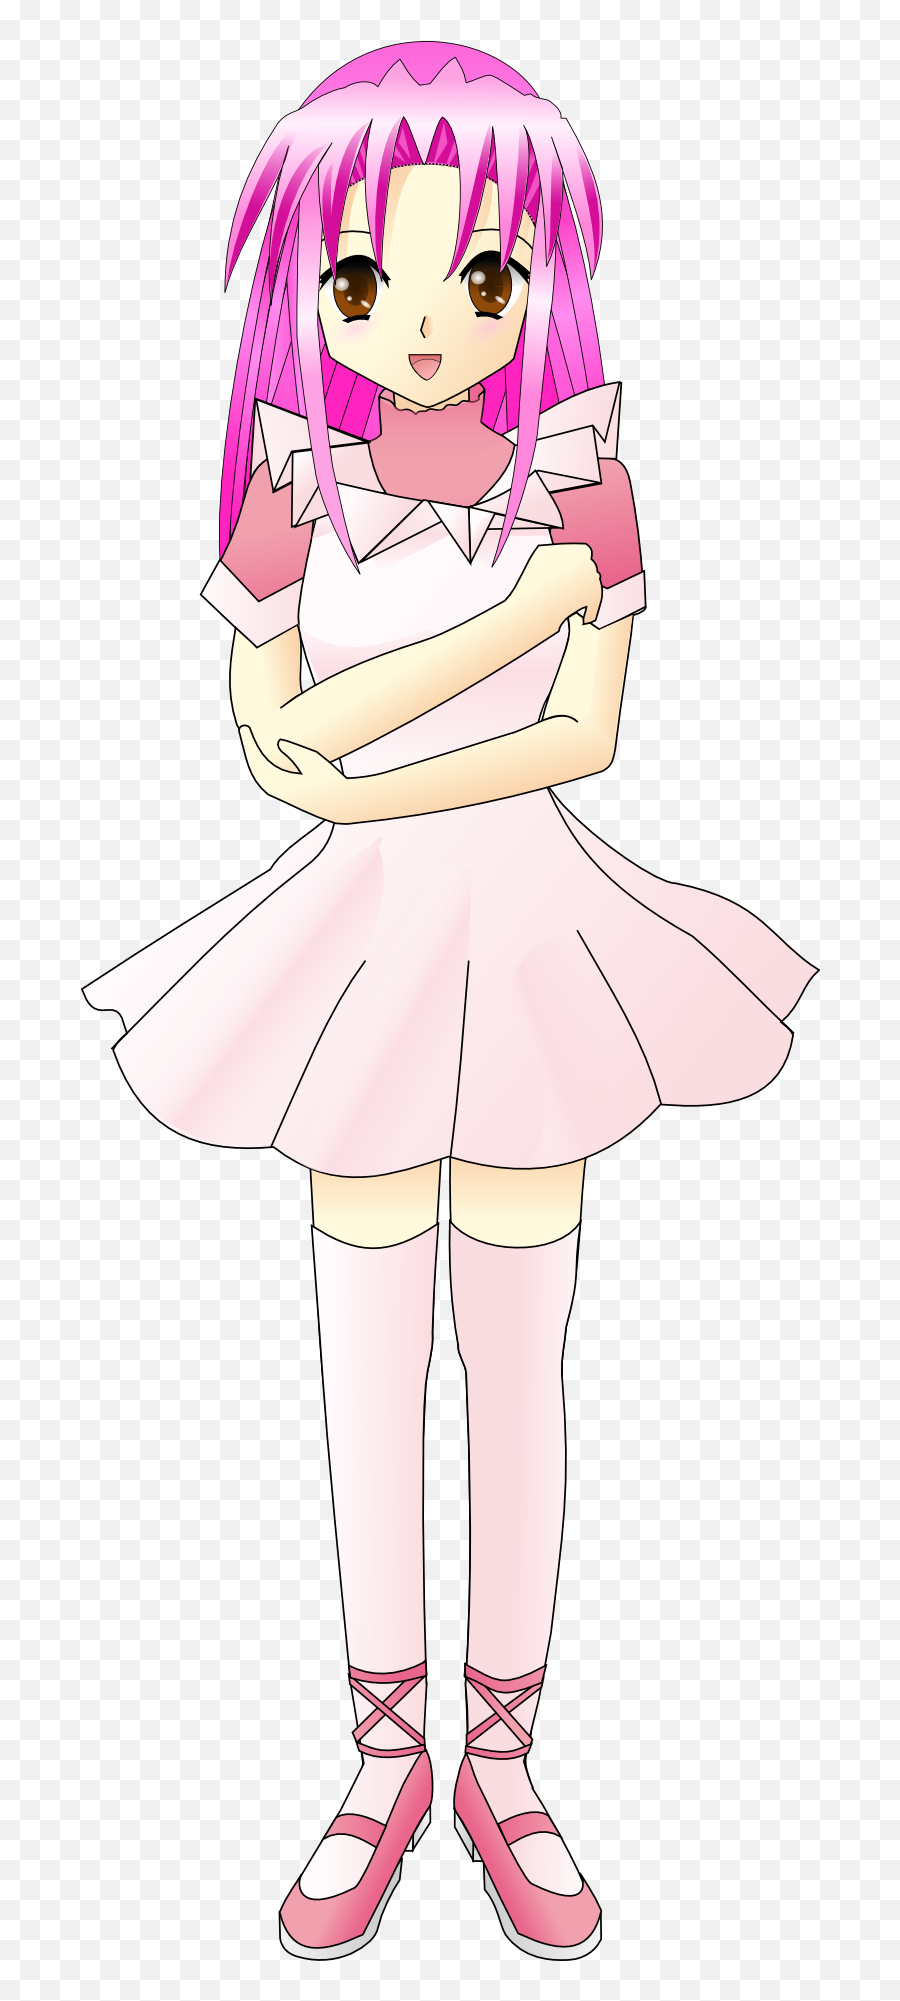 Painted Pink Anime Girl Free Image Download Emoji,Anime Girl Representing Emotions